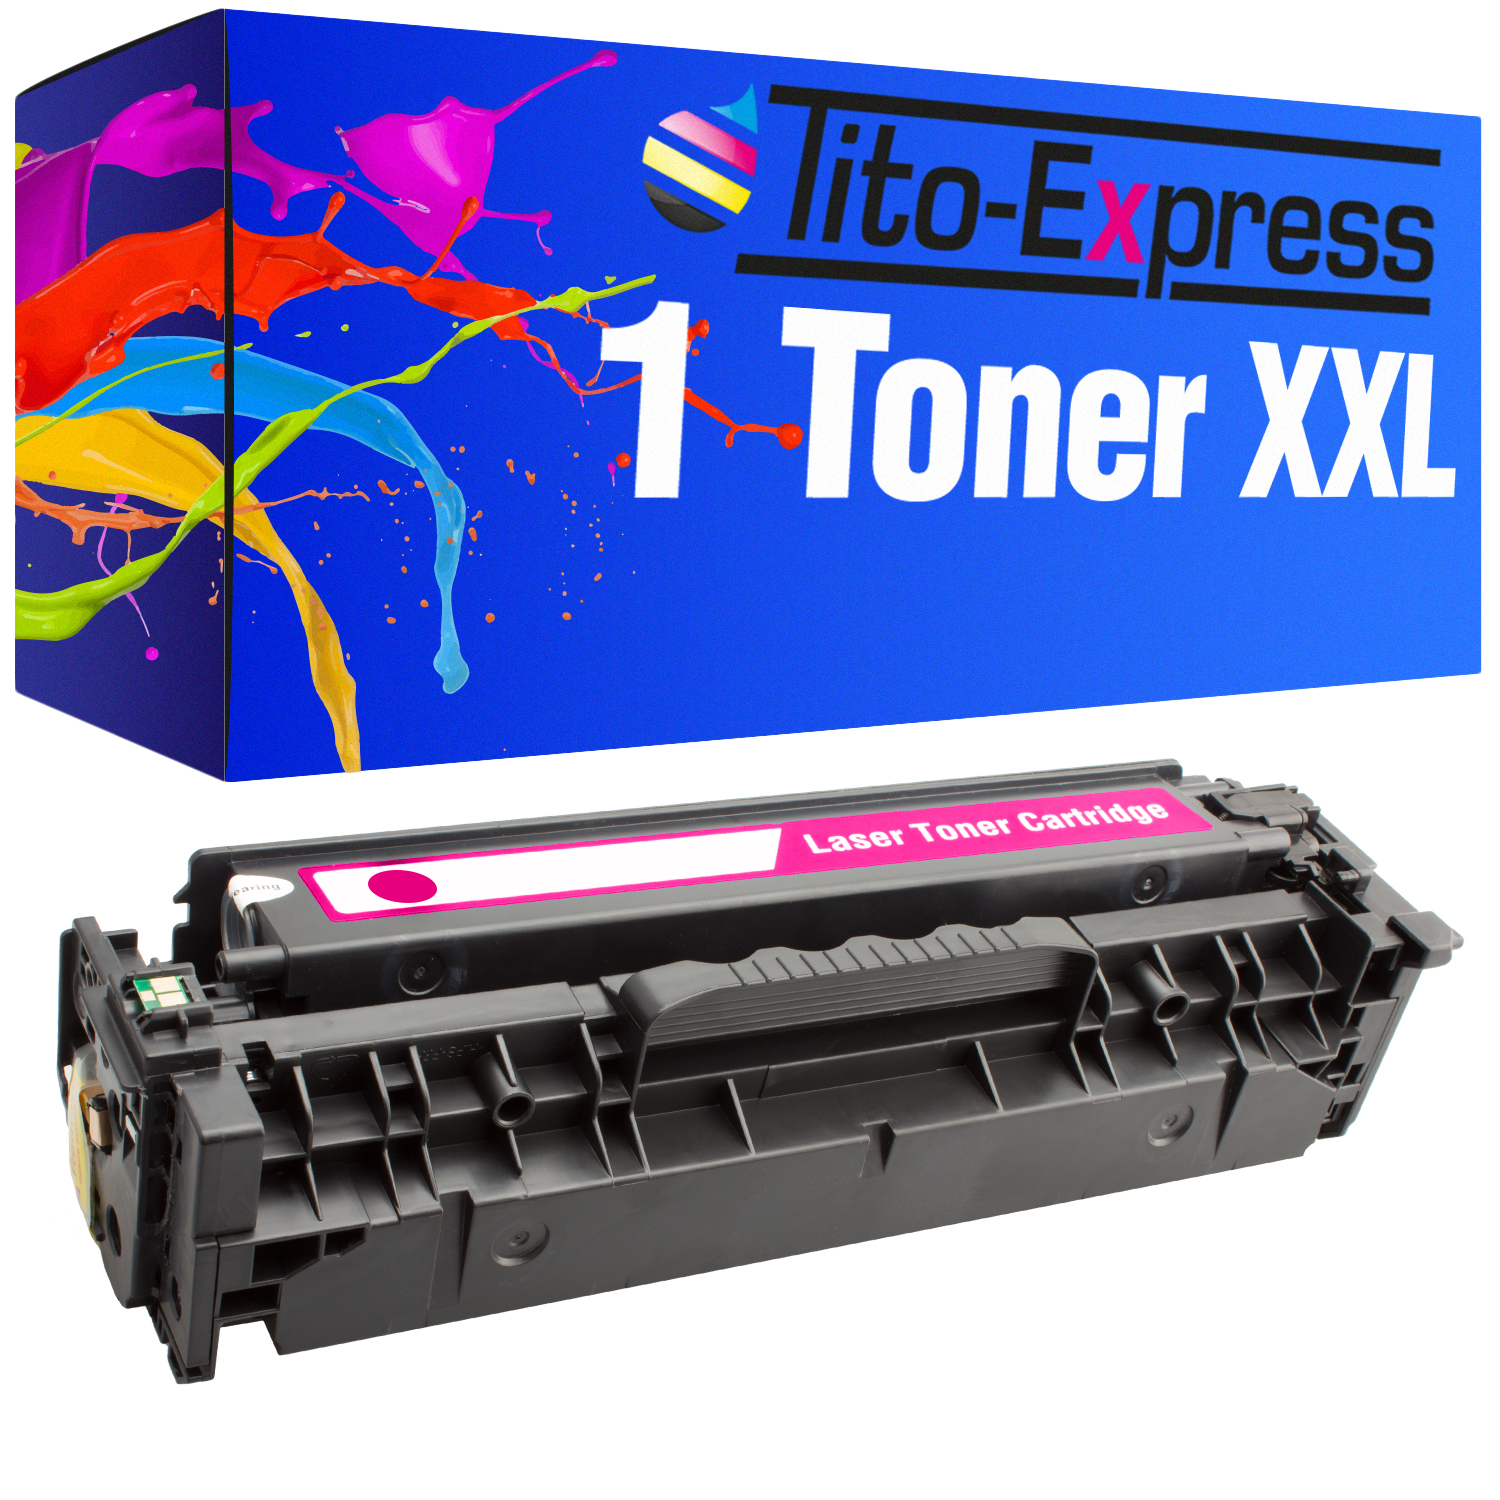 1 PLATINUMSERIE Toner HP 312A TITO-EXPRESS (CF383A) magenta Toner ersetzt